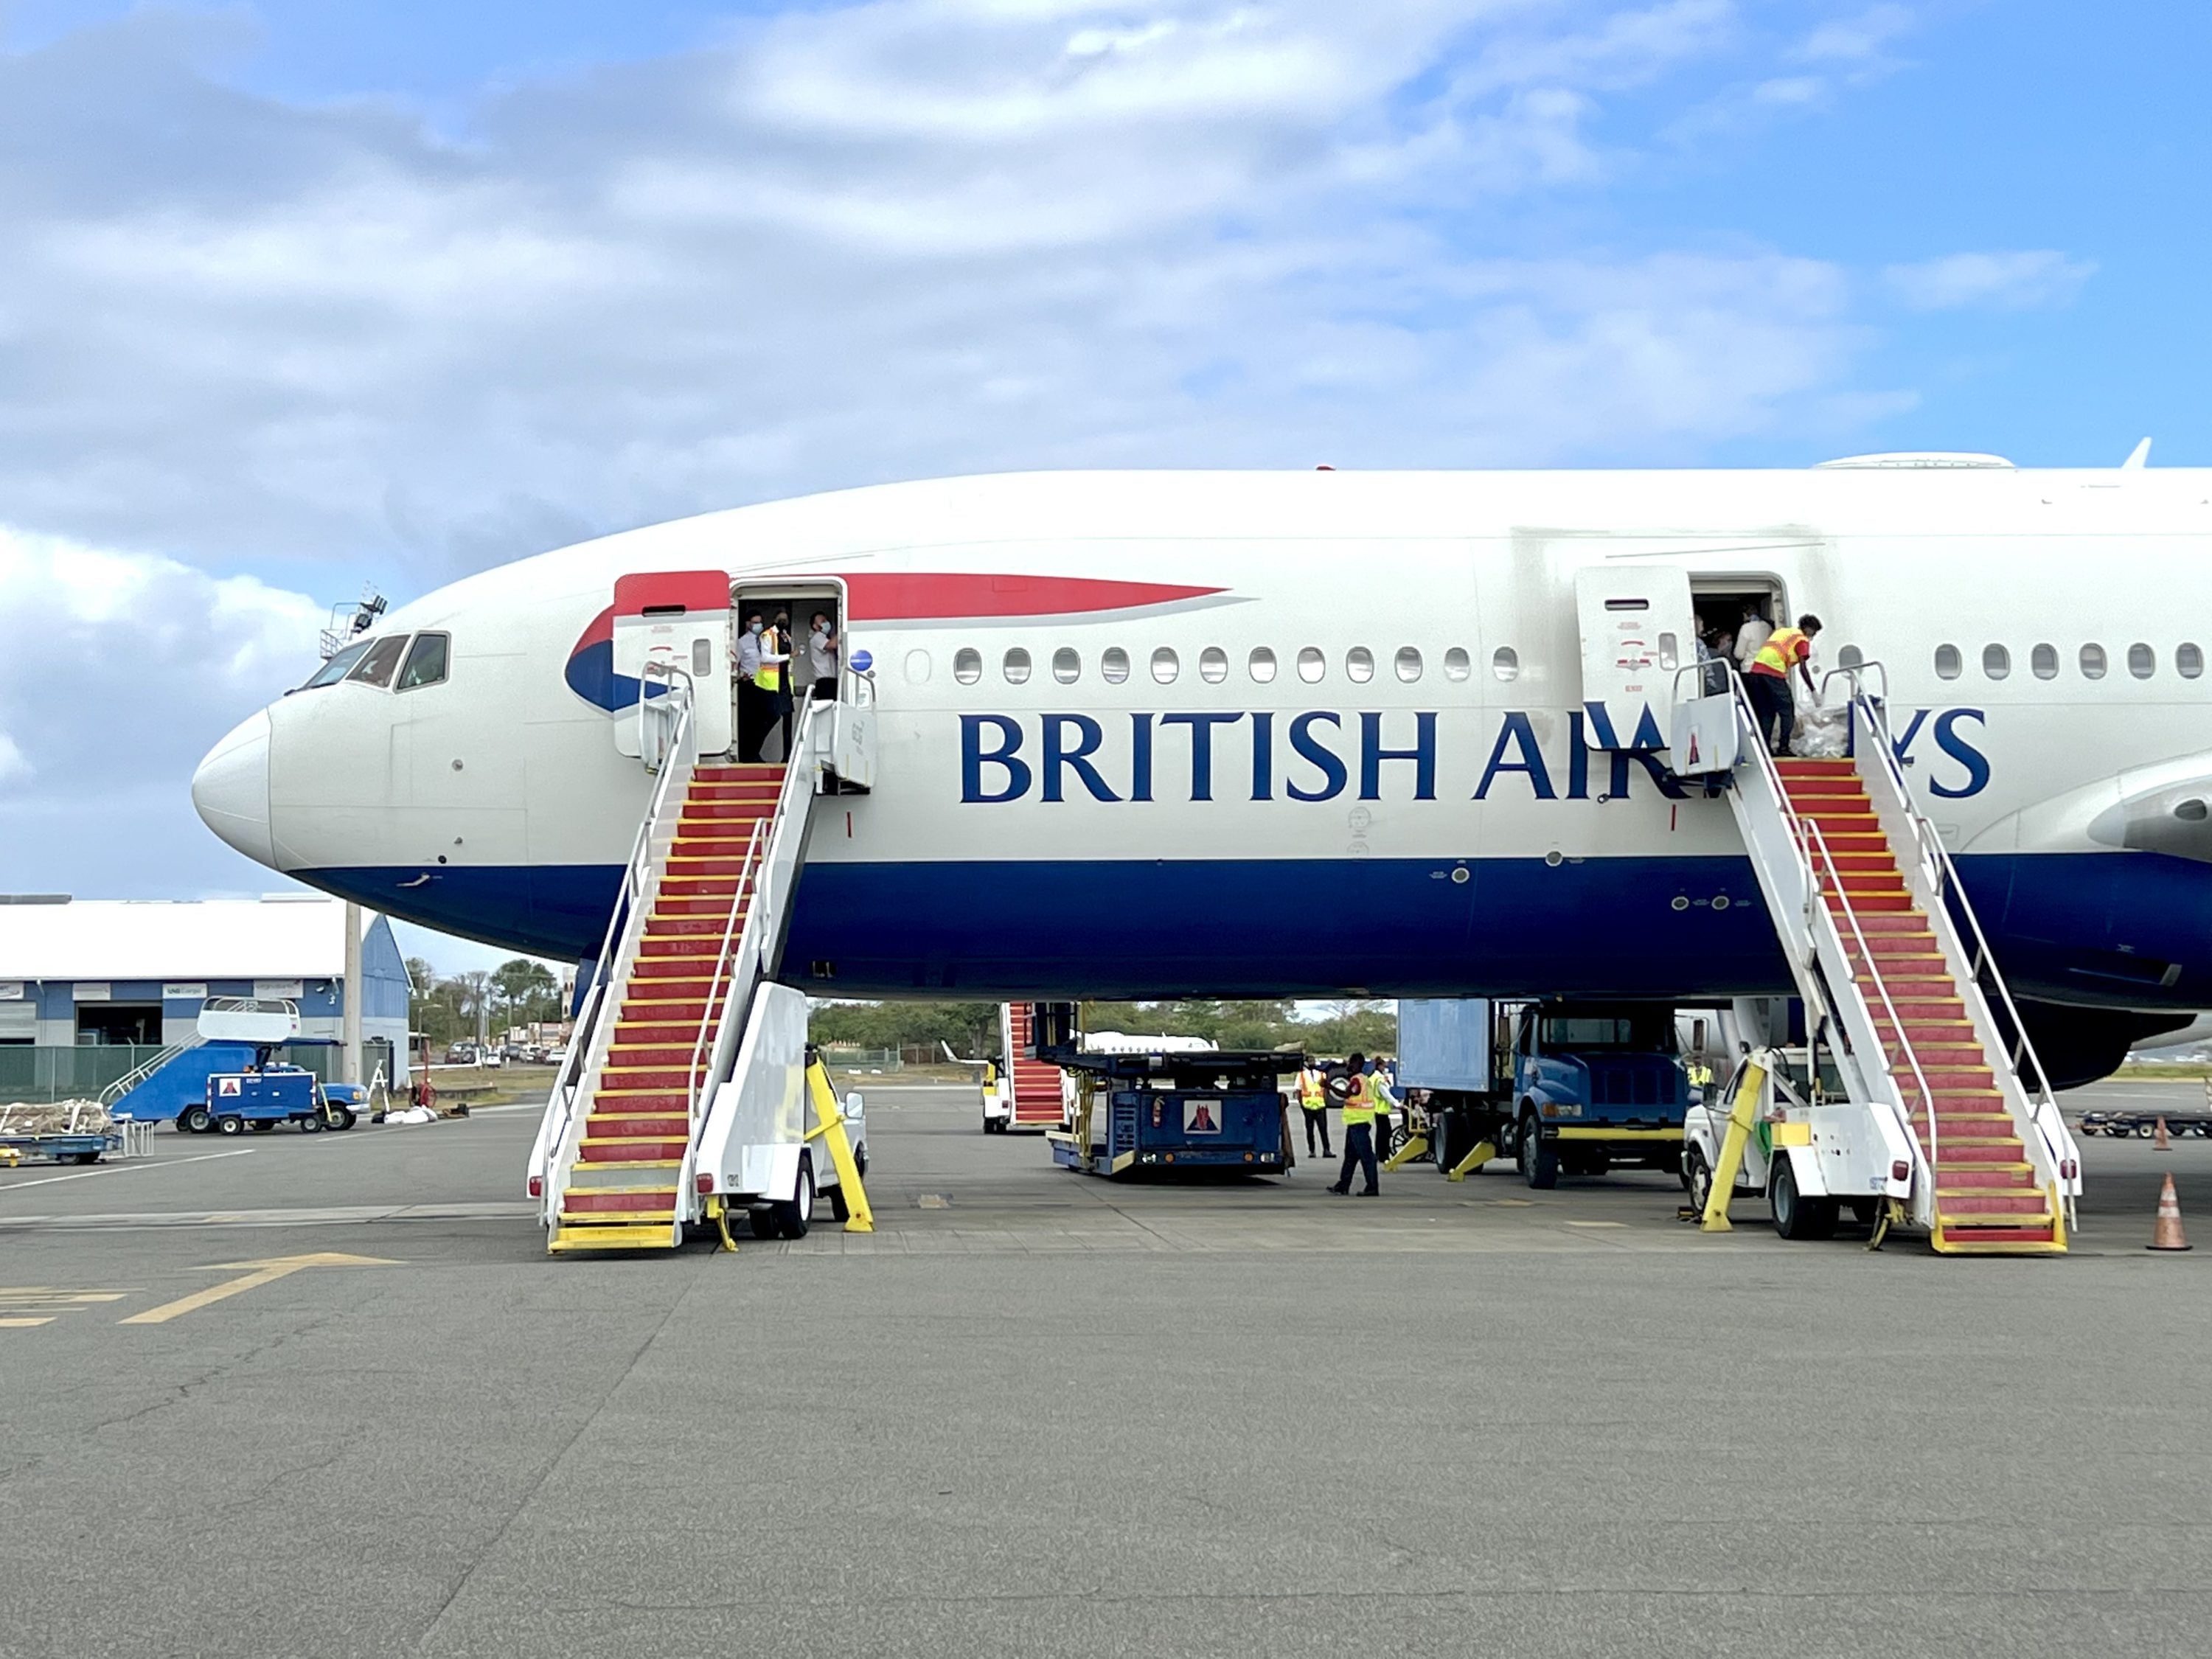 British Airways Boeing 777 200 Club World UVF boarding via steps